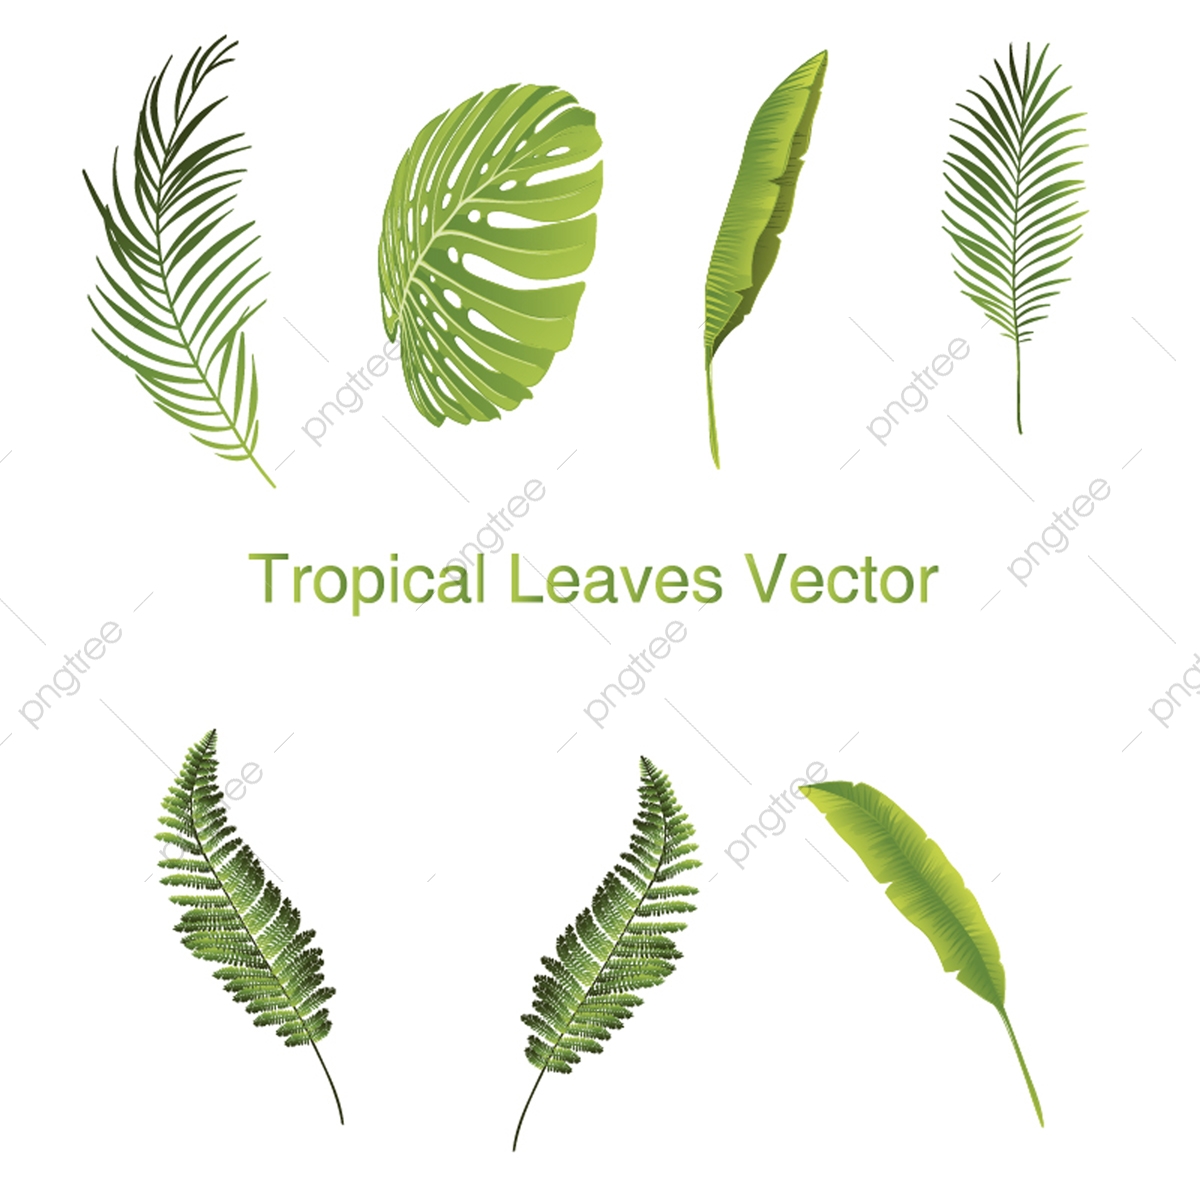 1,263 Tropical vector images at Vectorified.com